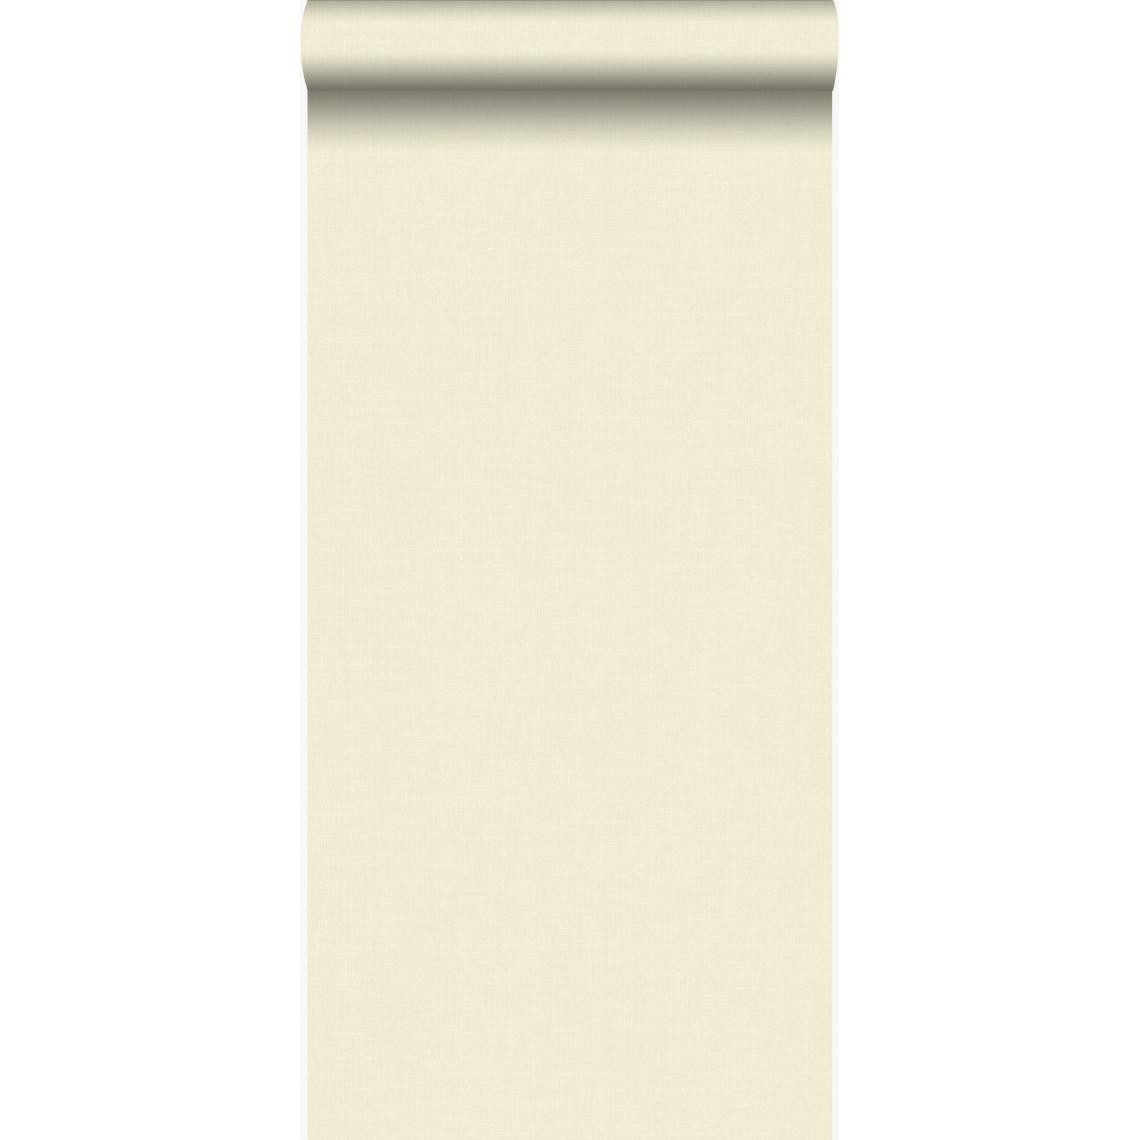 Origin - Origin papier peint structure fine beige - 346508 - 53 cm x 10,05 m - Papier peint